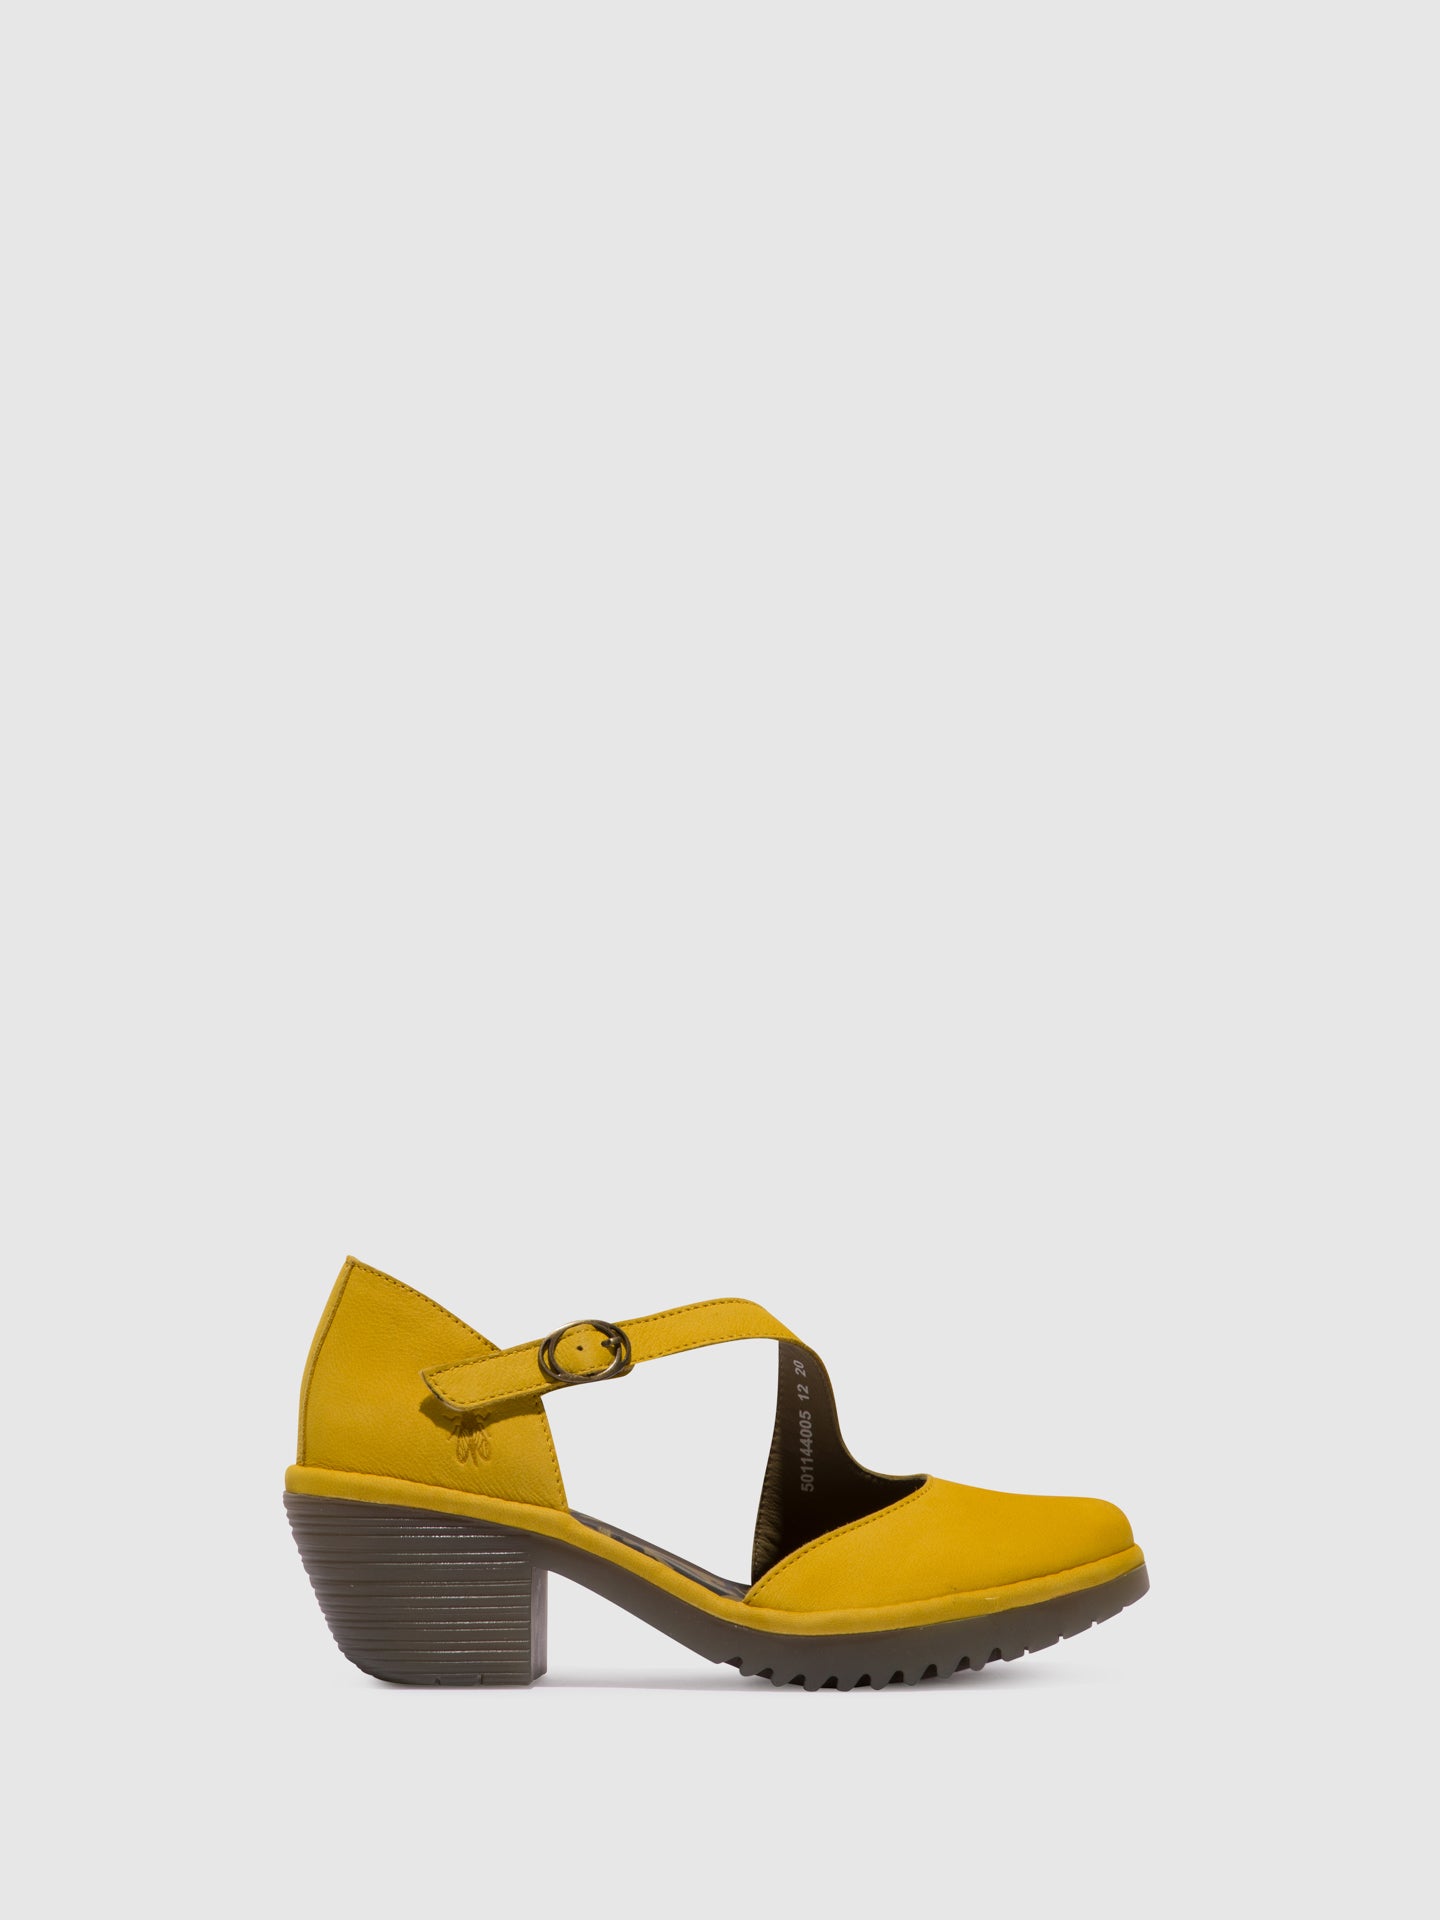 Fly London Yellow Velcro Sandals